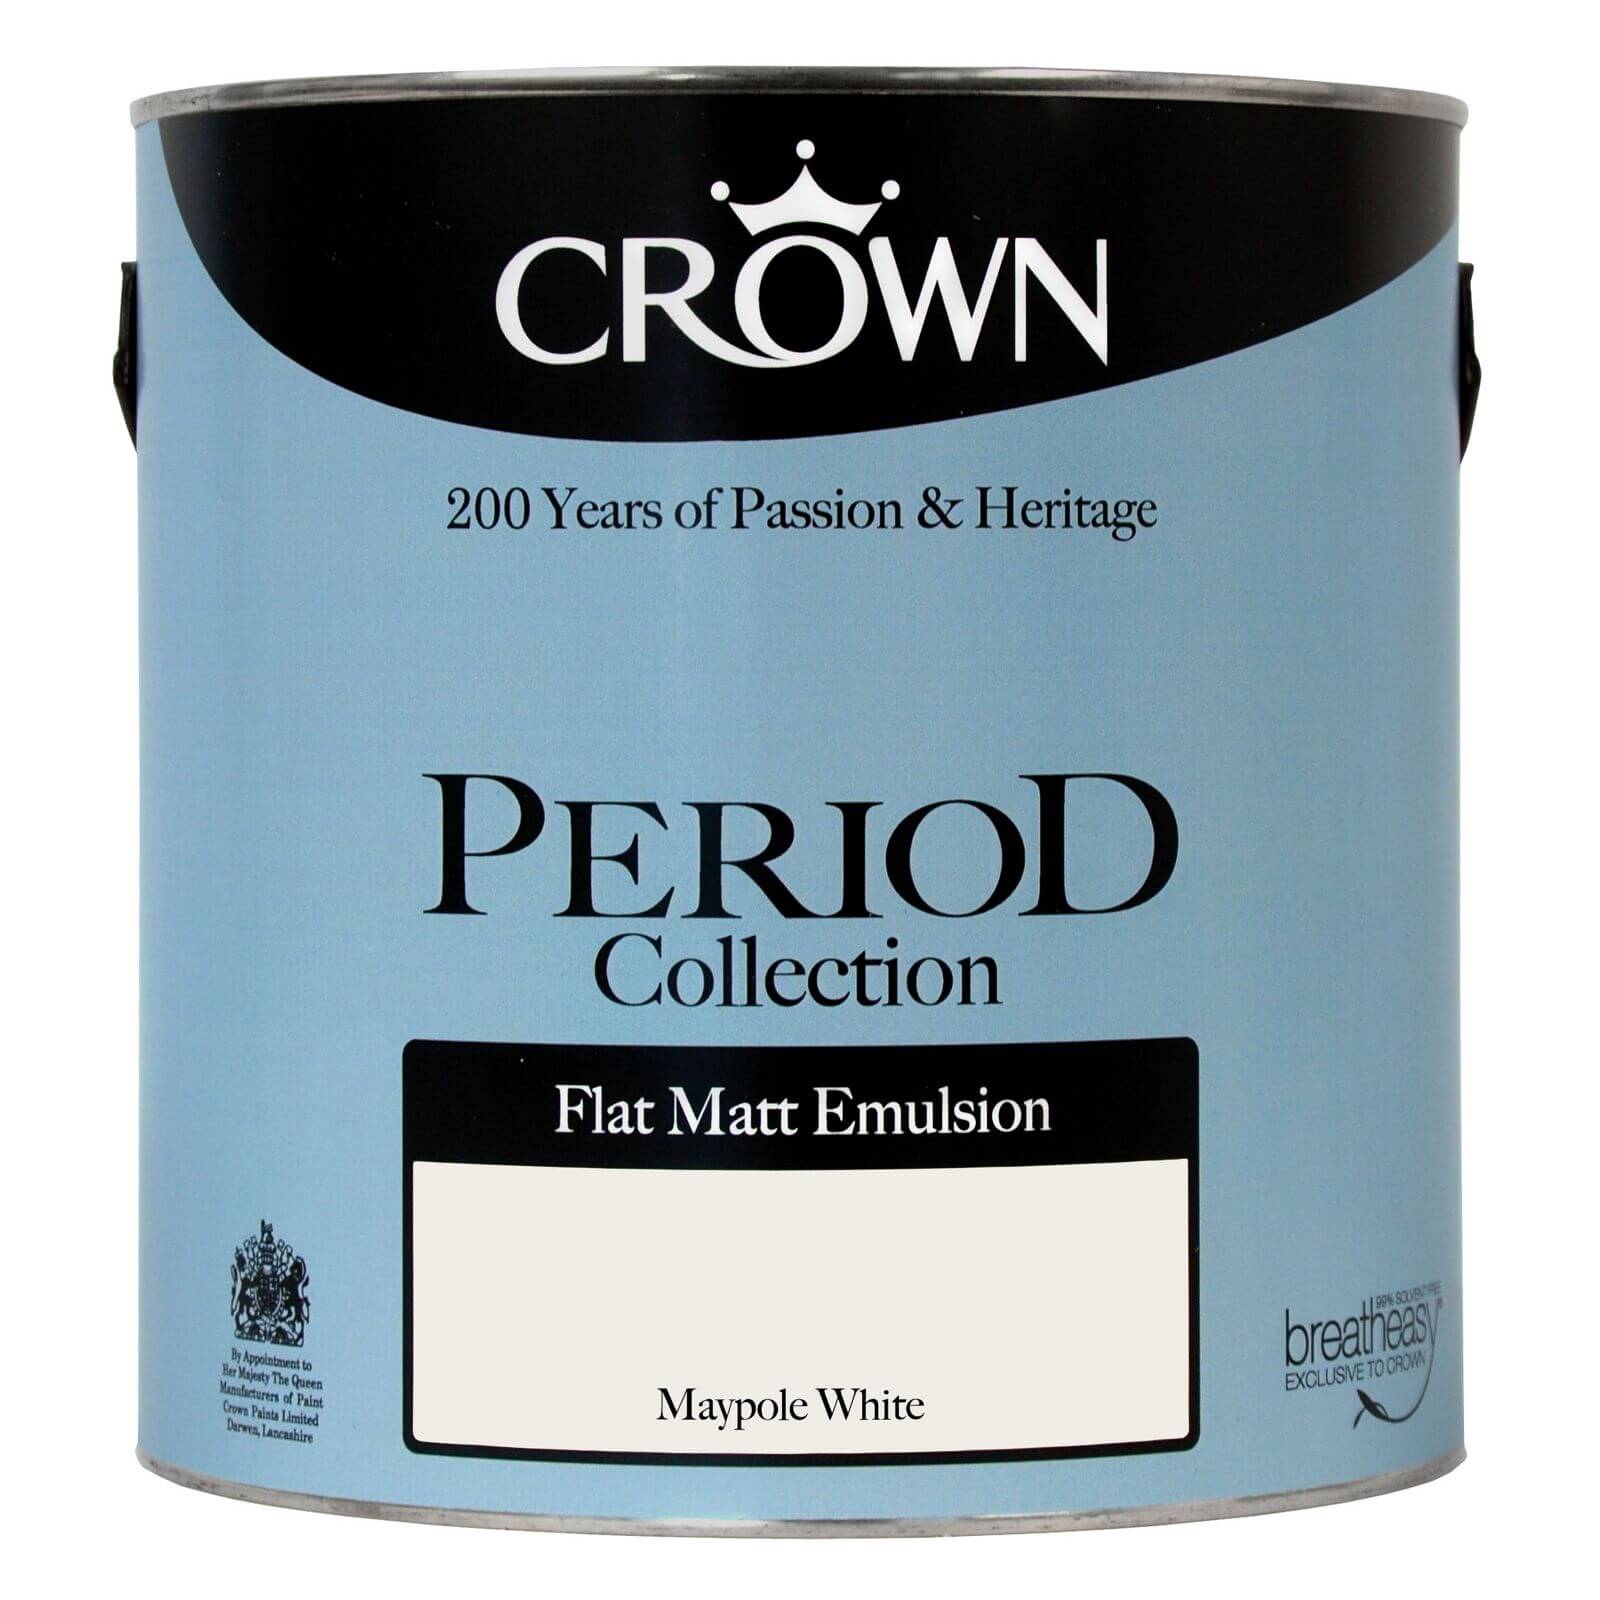 Crown Period Collection Maypole White - Flat Matt Emulsion Paint - 2.5L